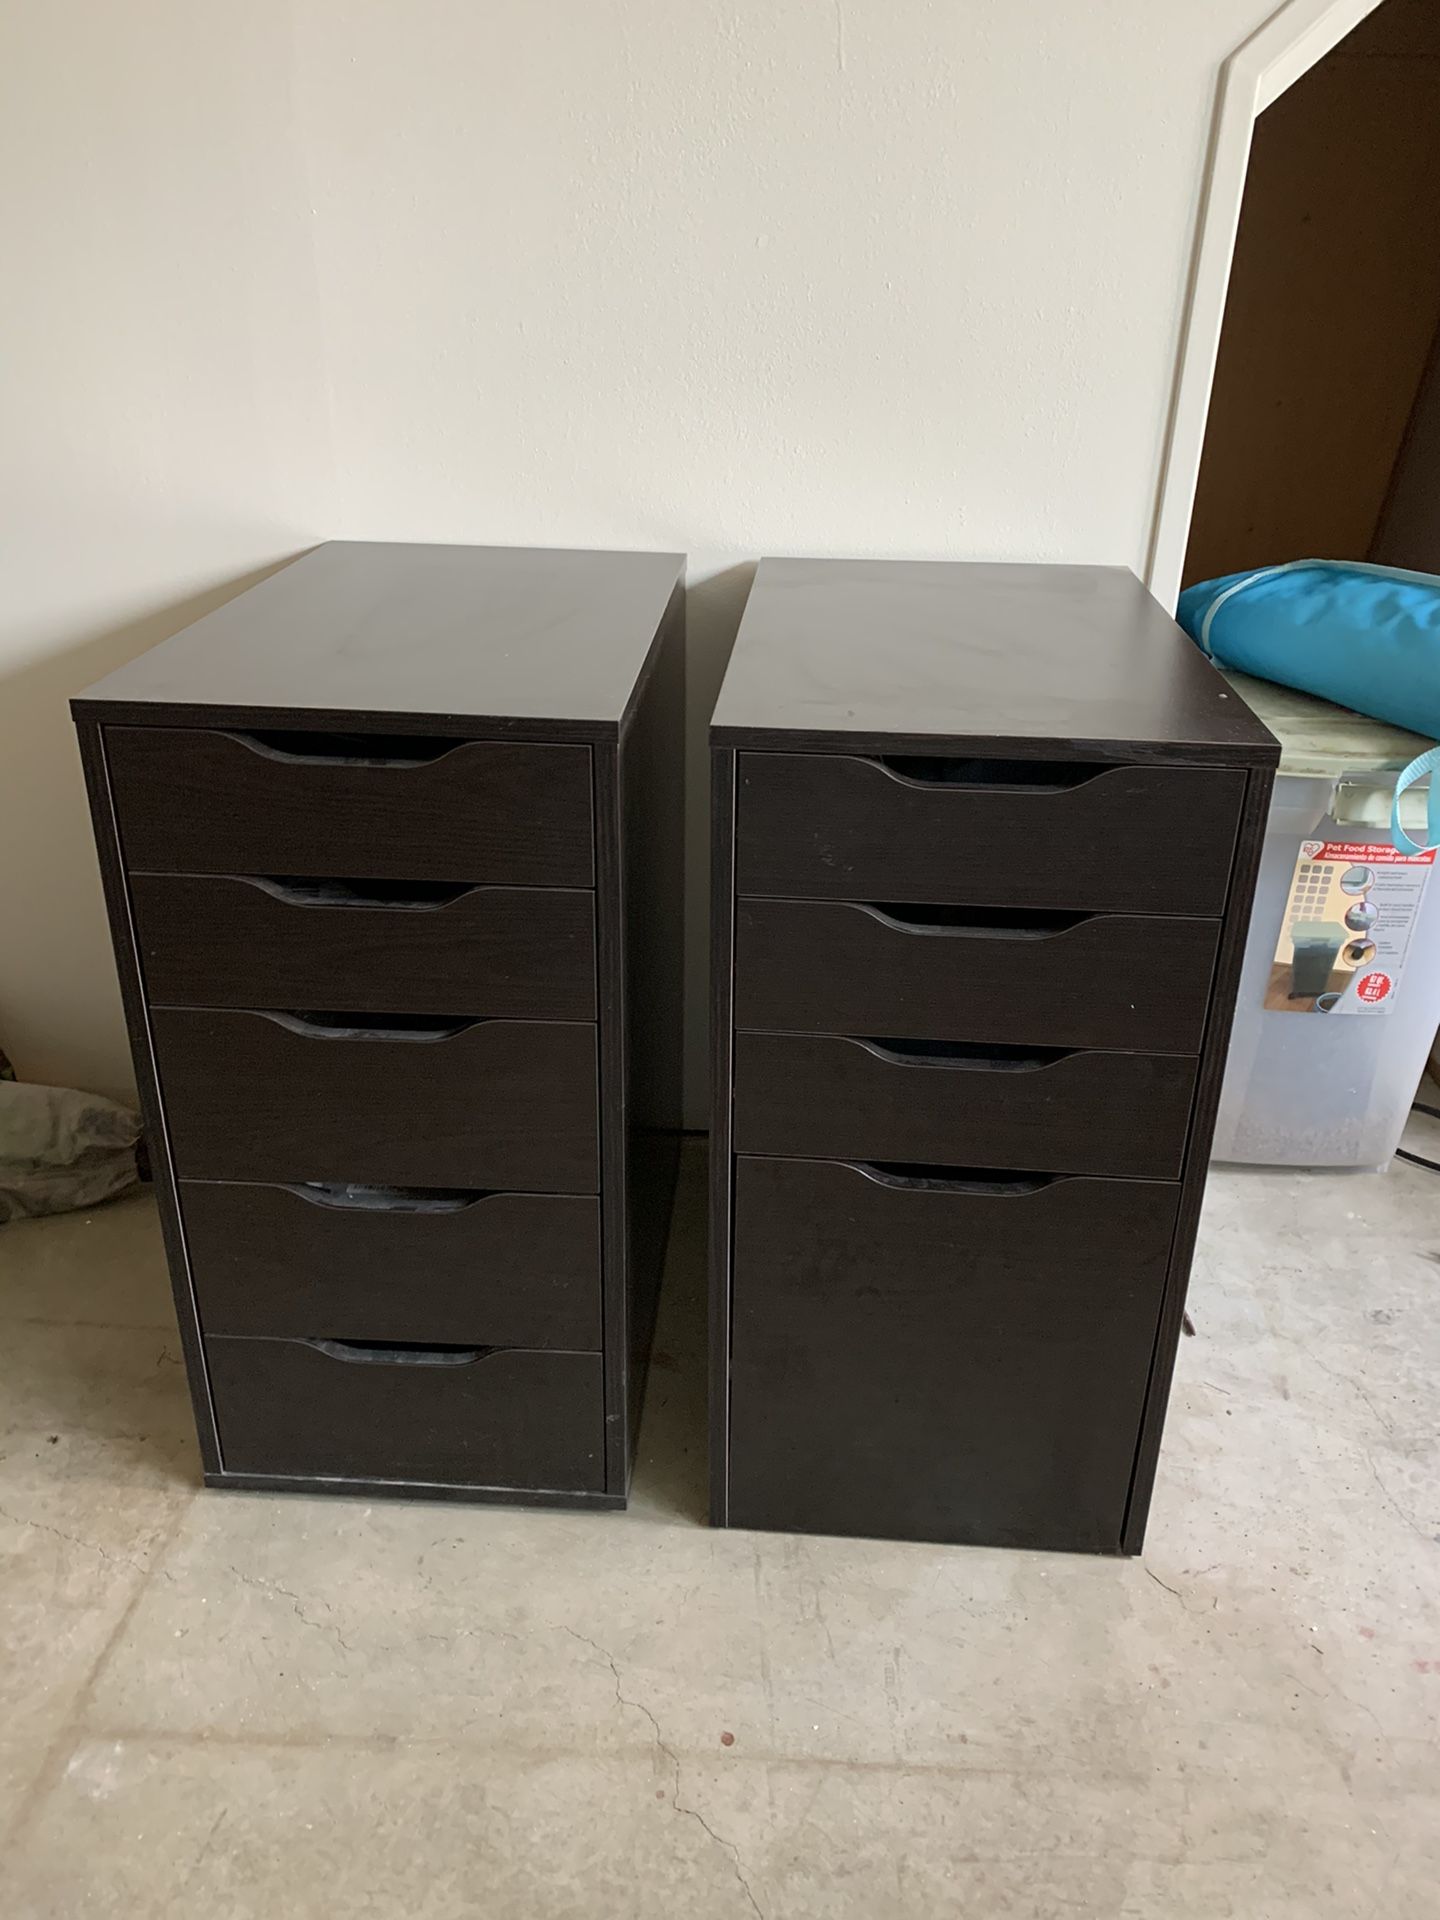 IKEA desk drawer units